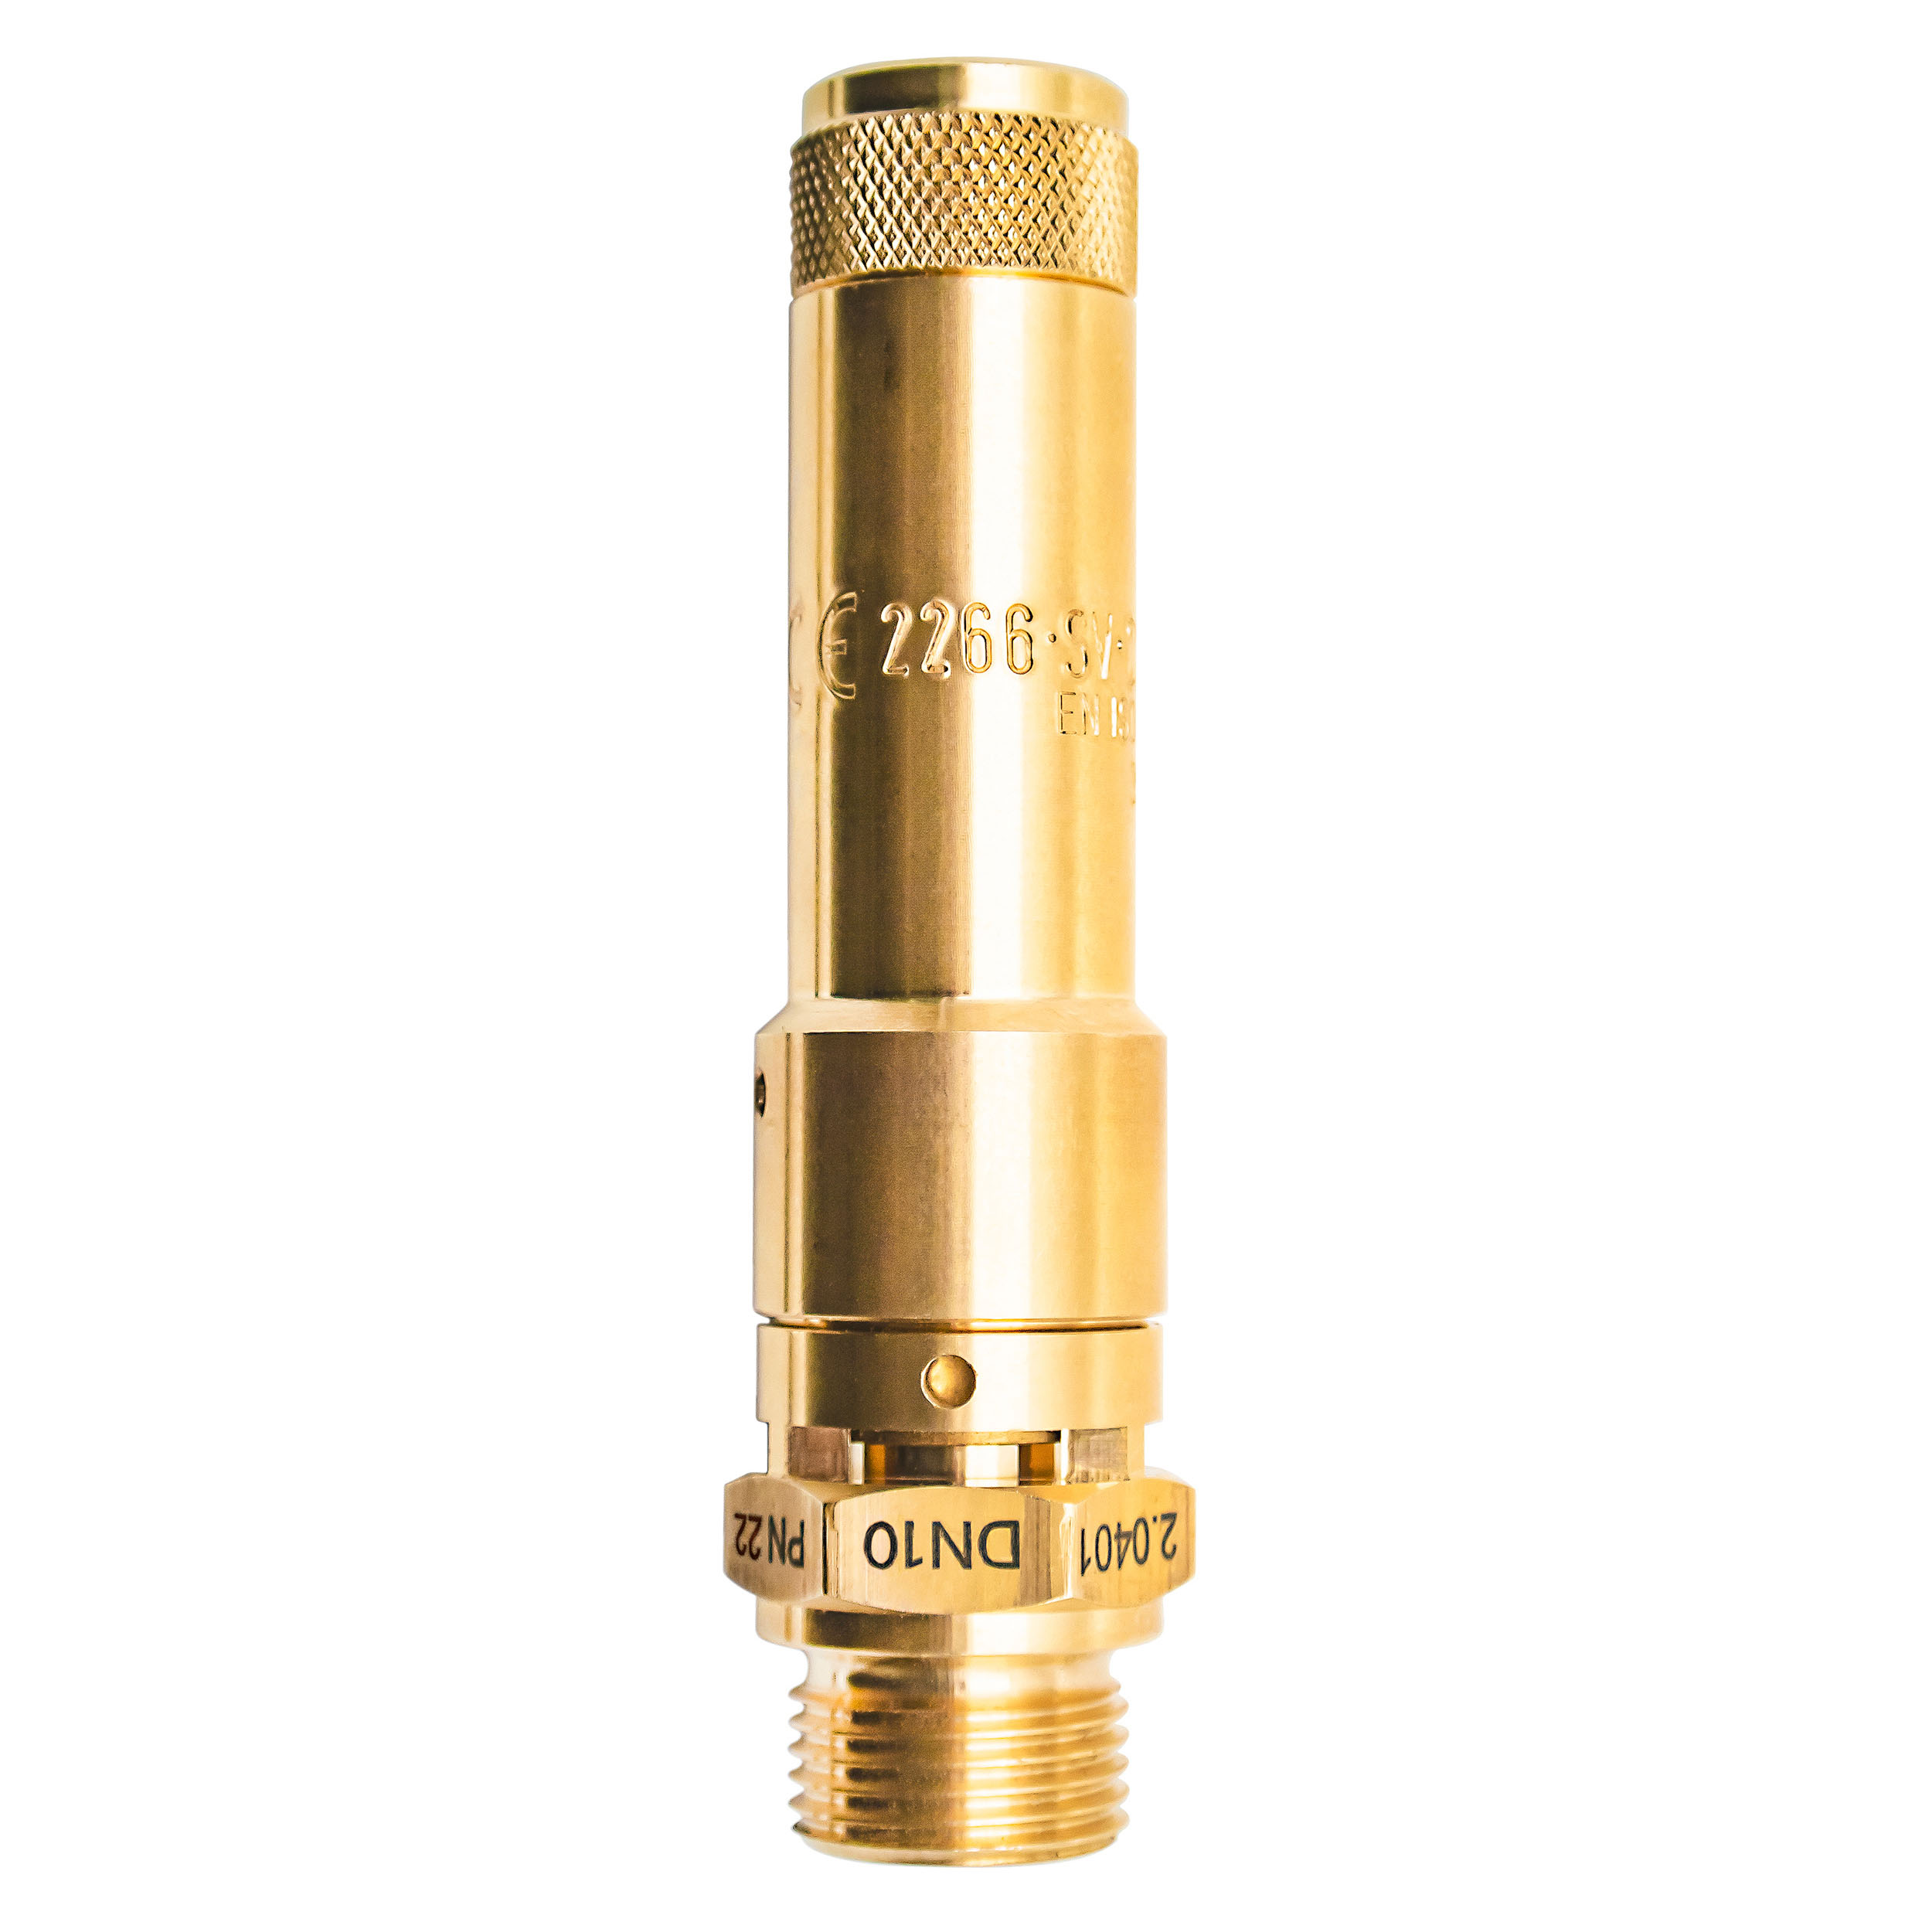 Savety valve component tested DN 10, G¾, set pressure: 13.3 bar (192,85 psi)